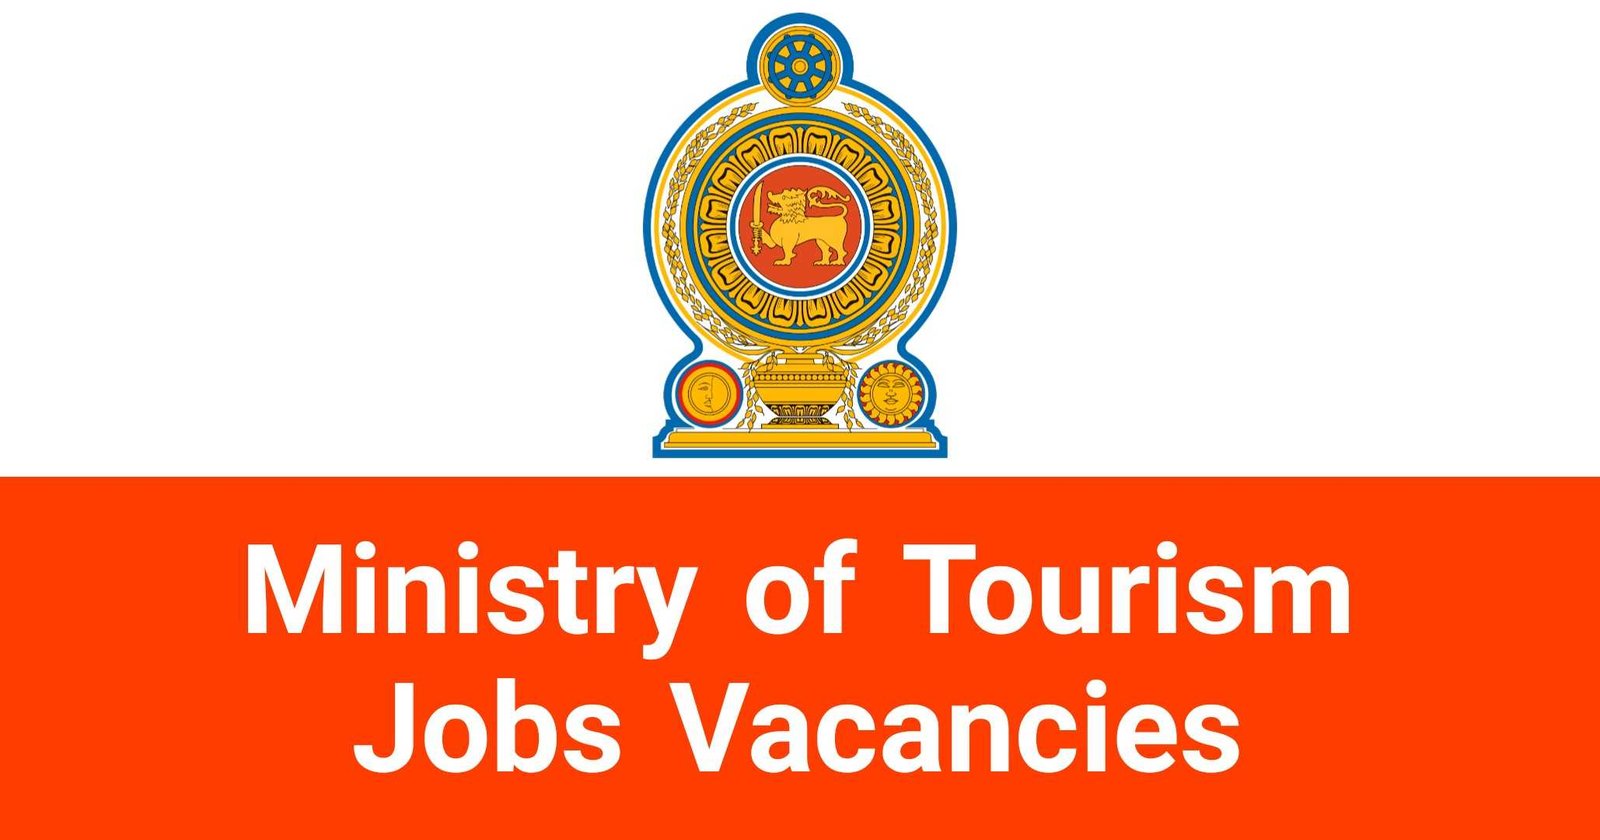 Ministry of Tourism Jobs Vacancies